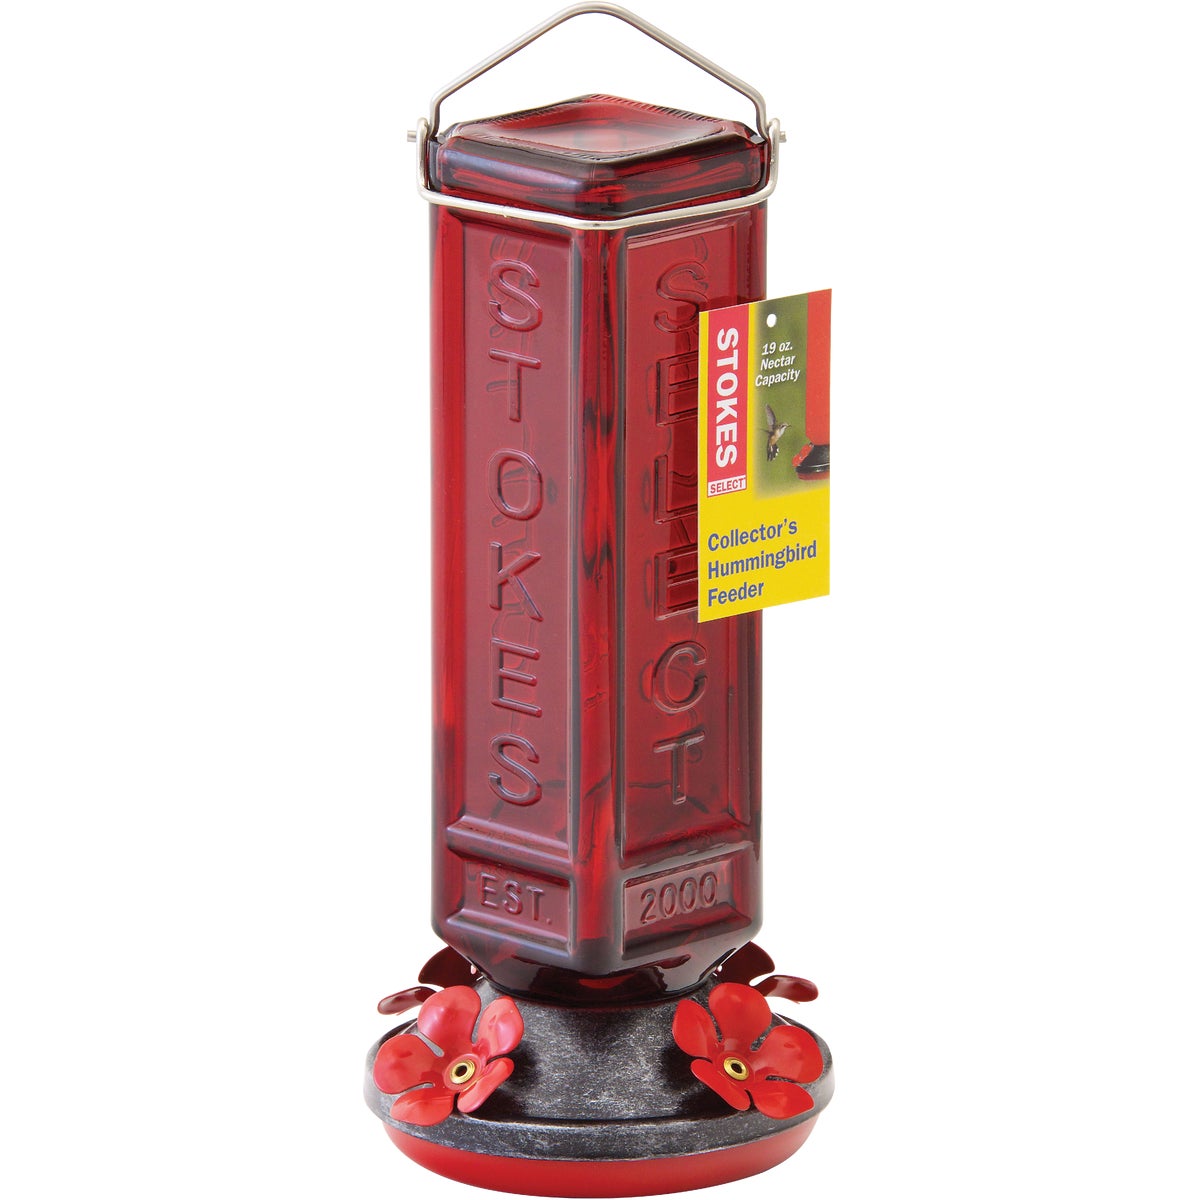 Item 703570, Collectors square hummingbird feeder is a decorative retro glass bottle 